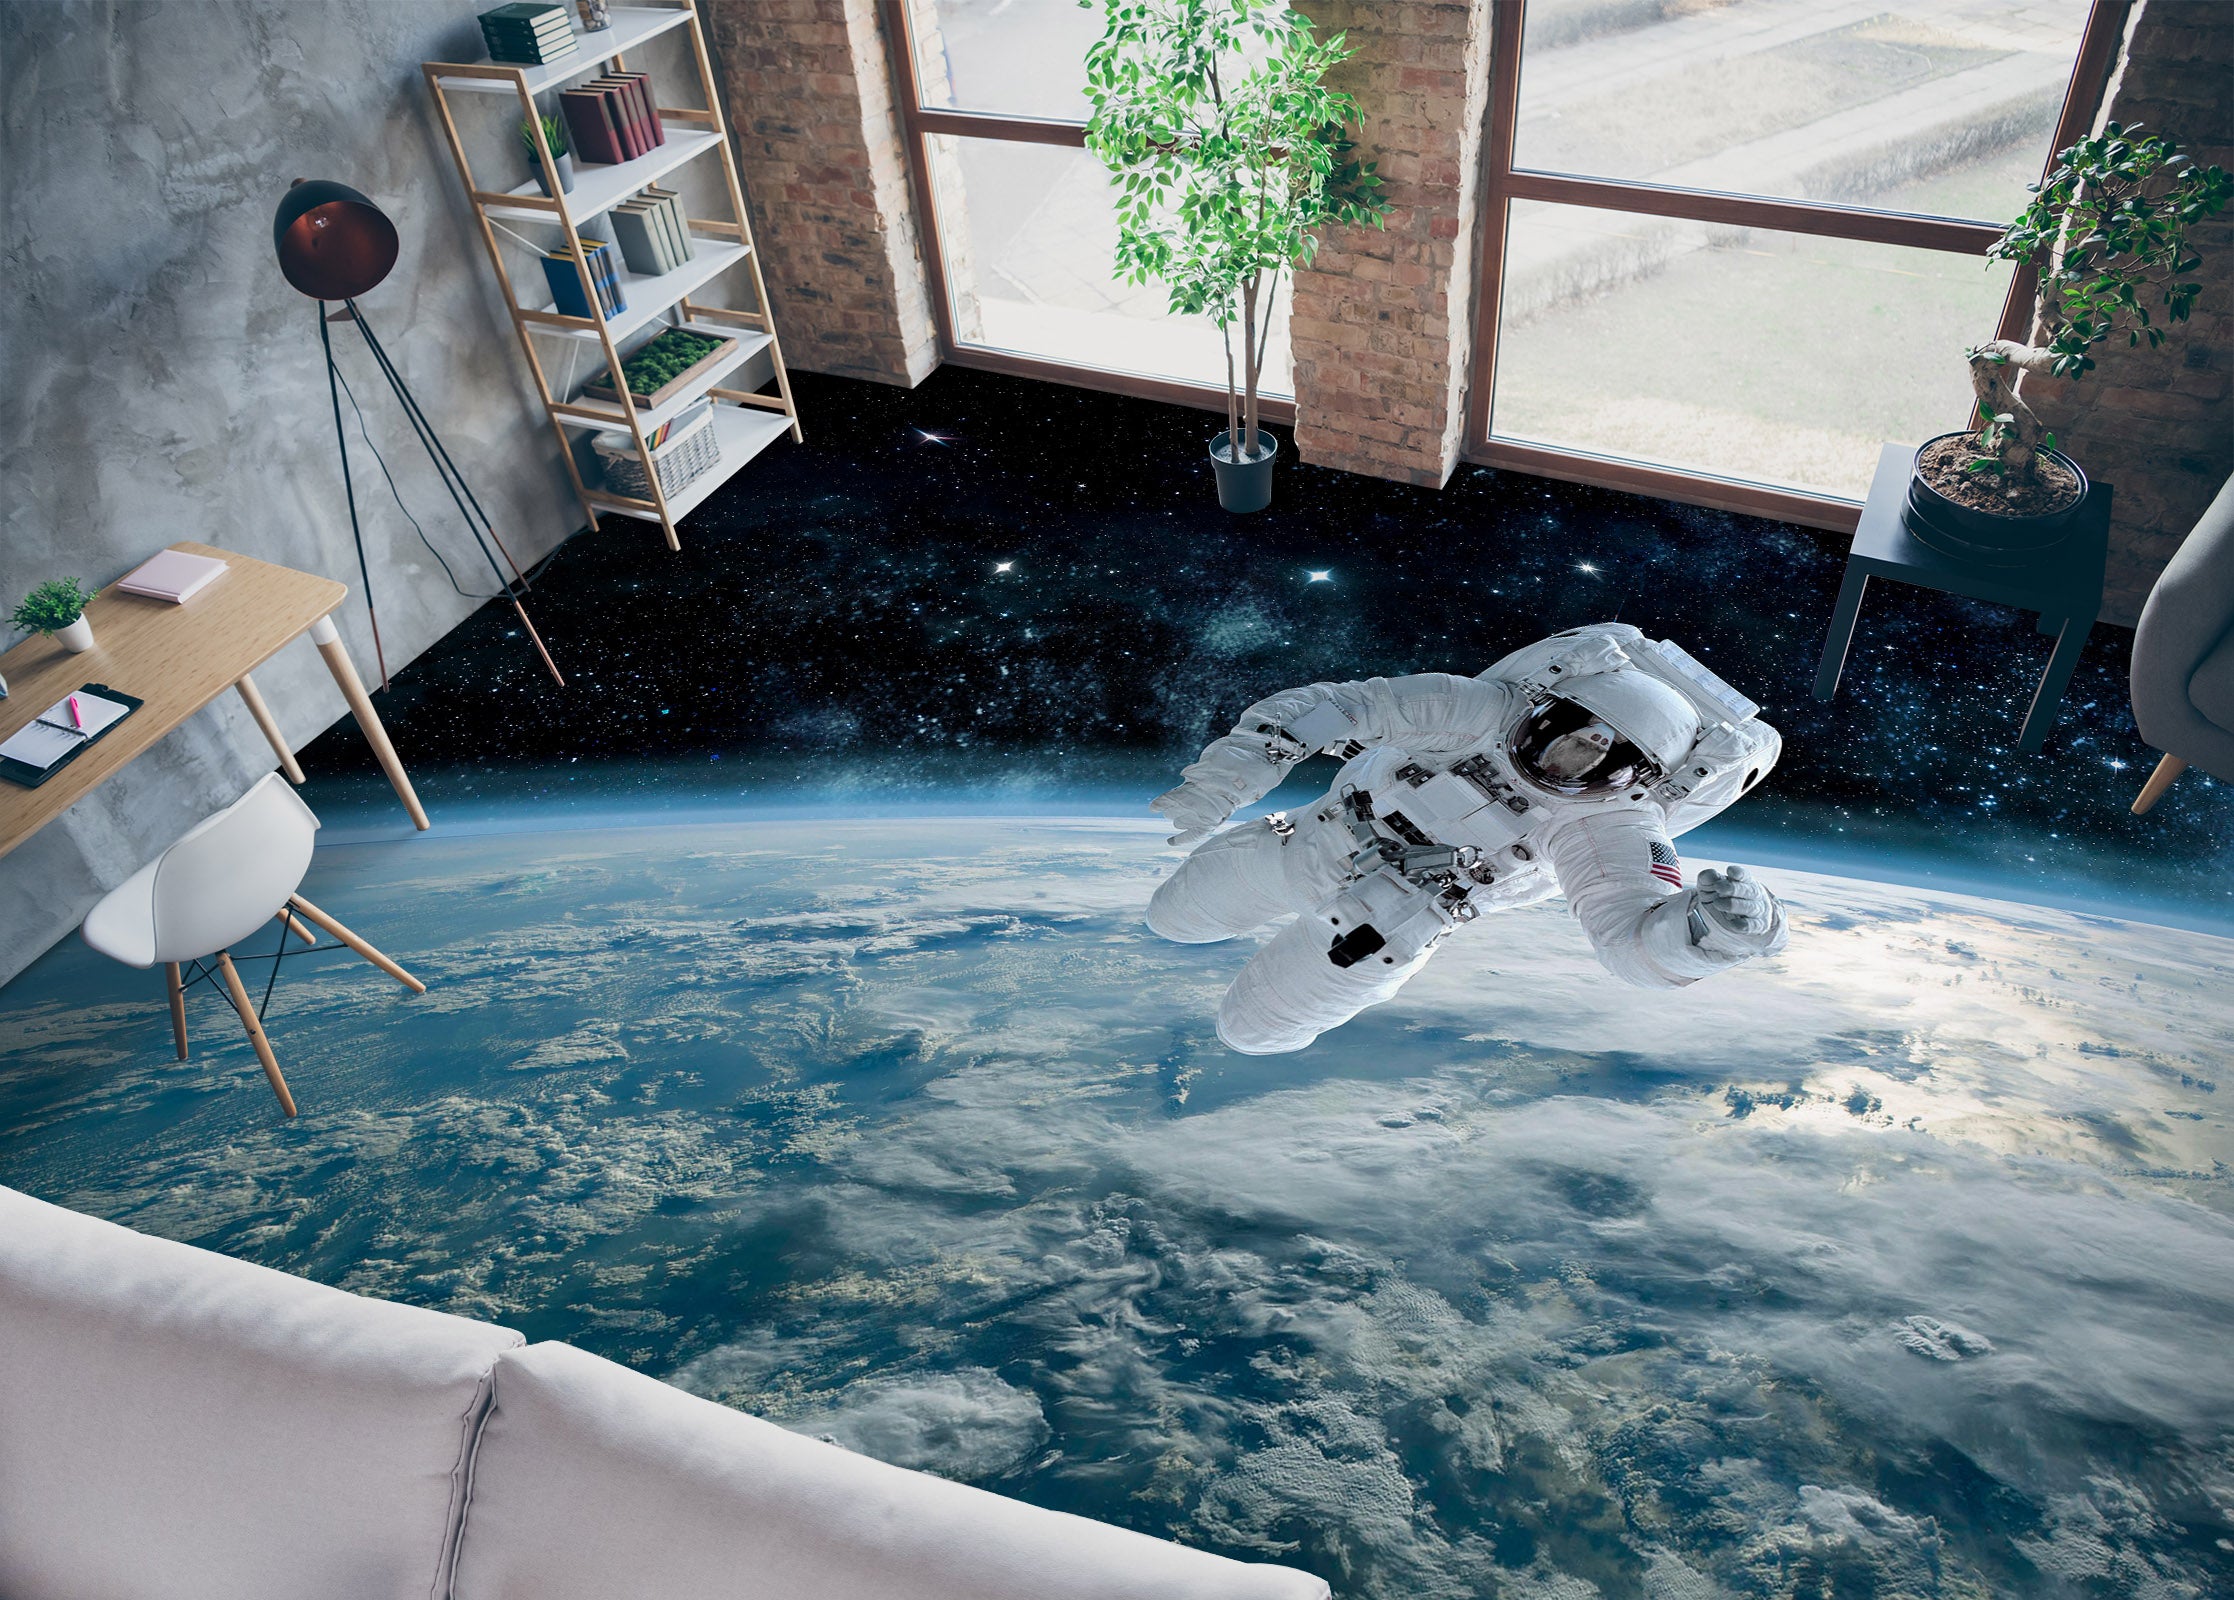 3D Astronaut Exploration 1267 Floor Mural  Wallpaper Murals Self-Adhesive Removable Print Epoxy